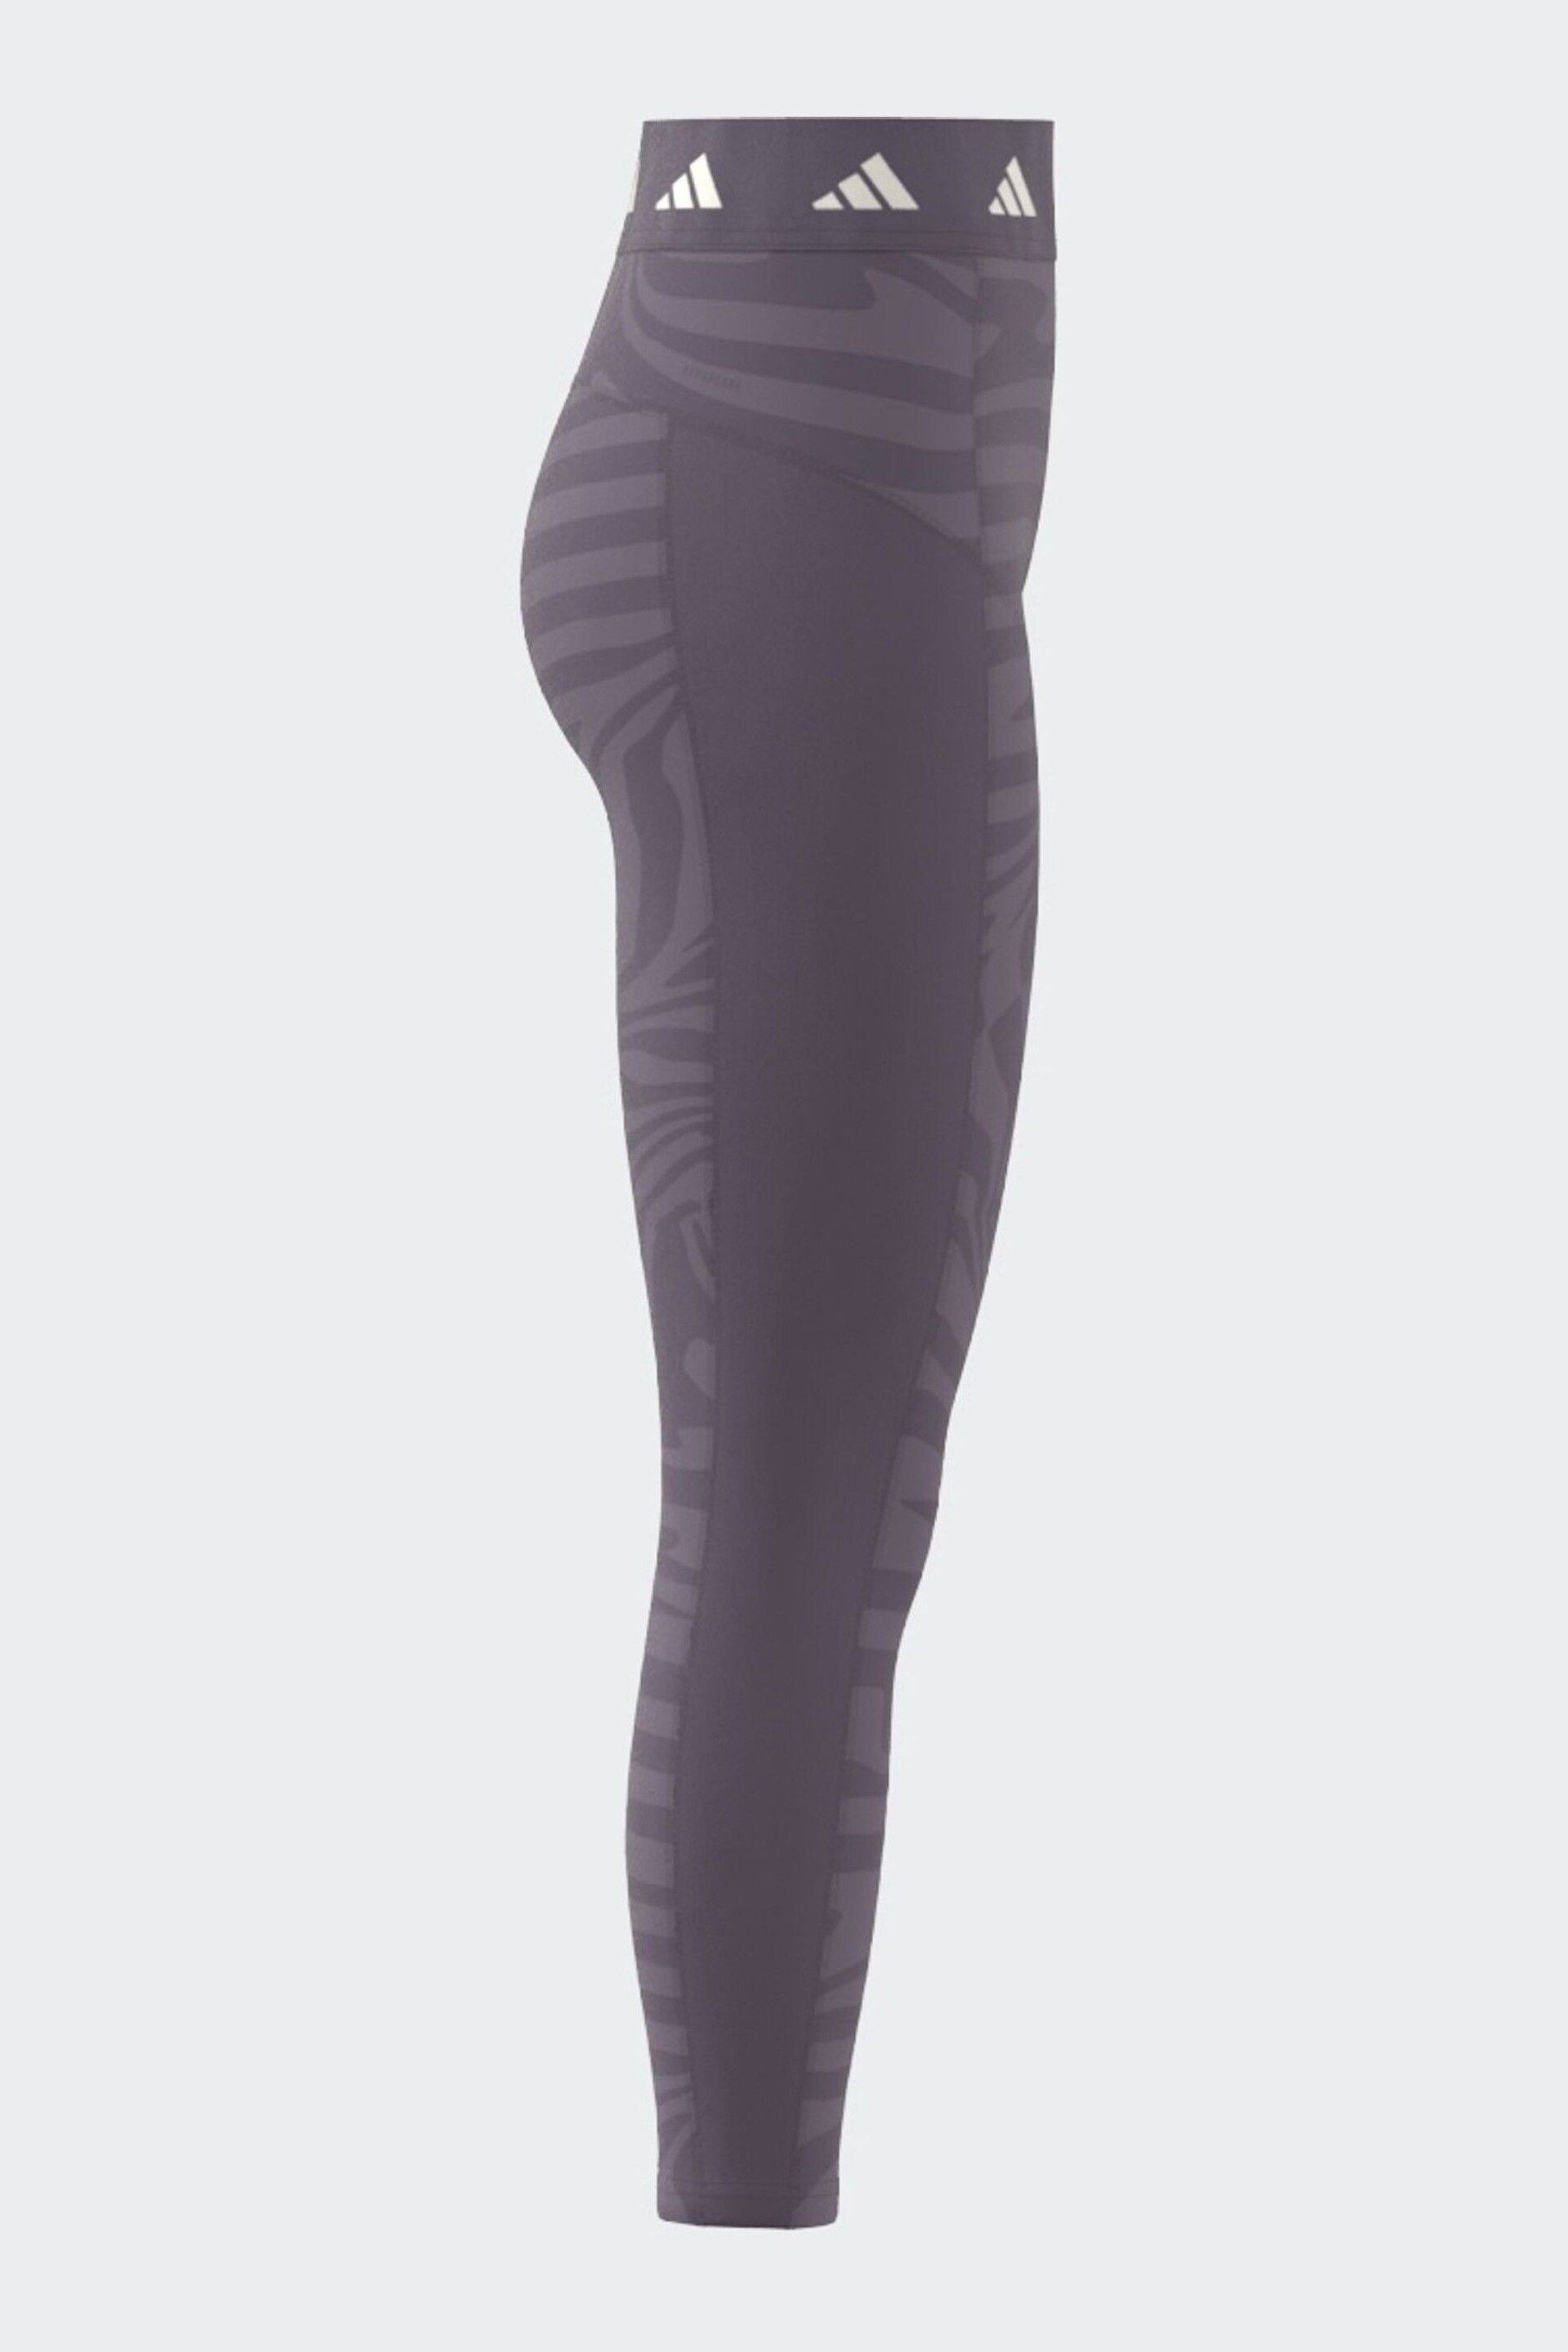 adidas Purple Techfit Printed 7/8 Leggings - Image 7 of 8